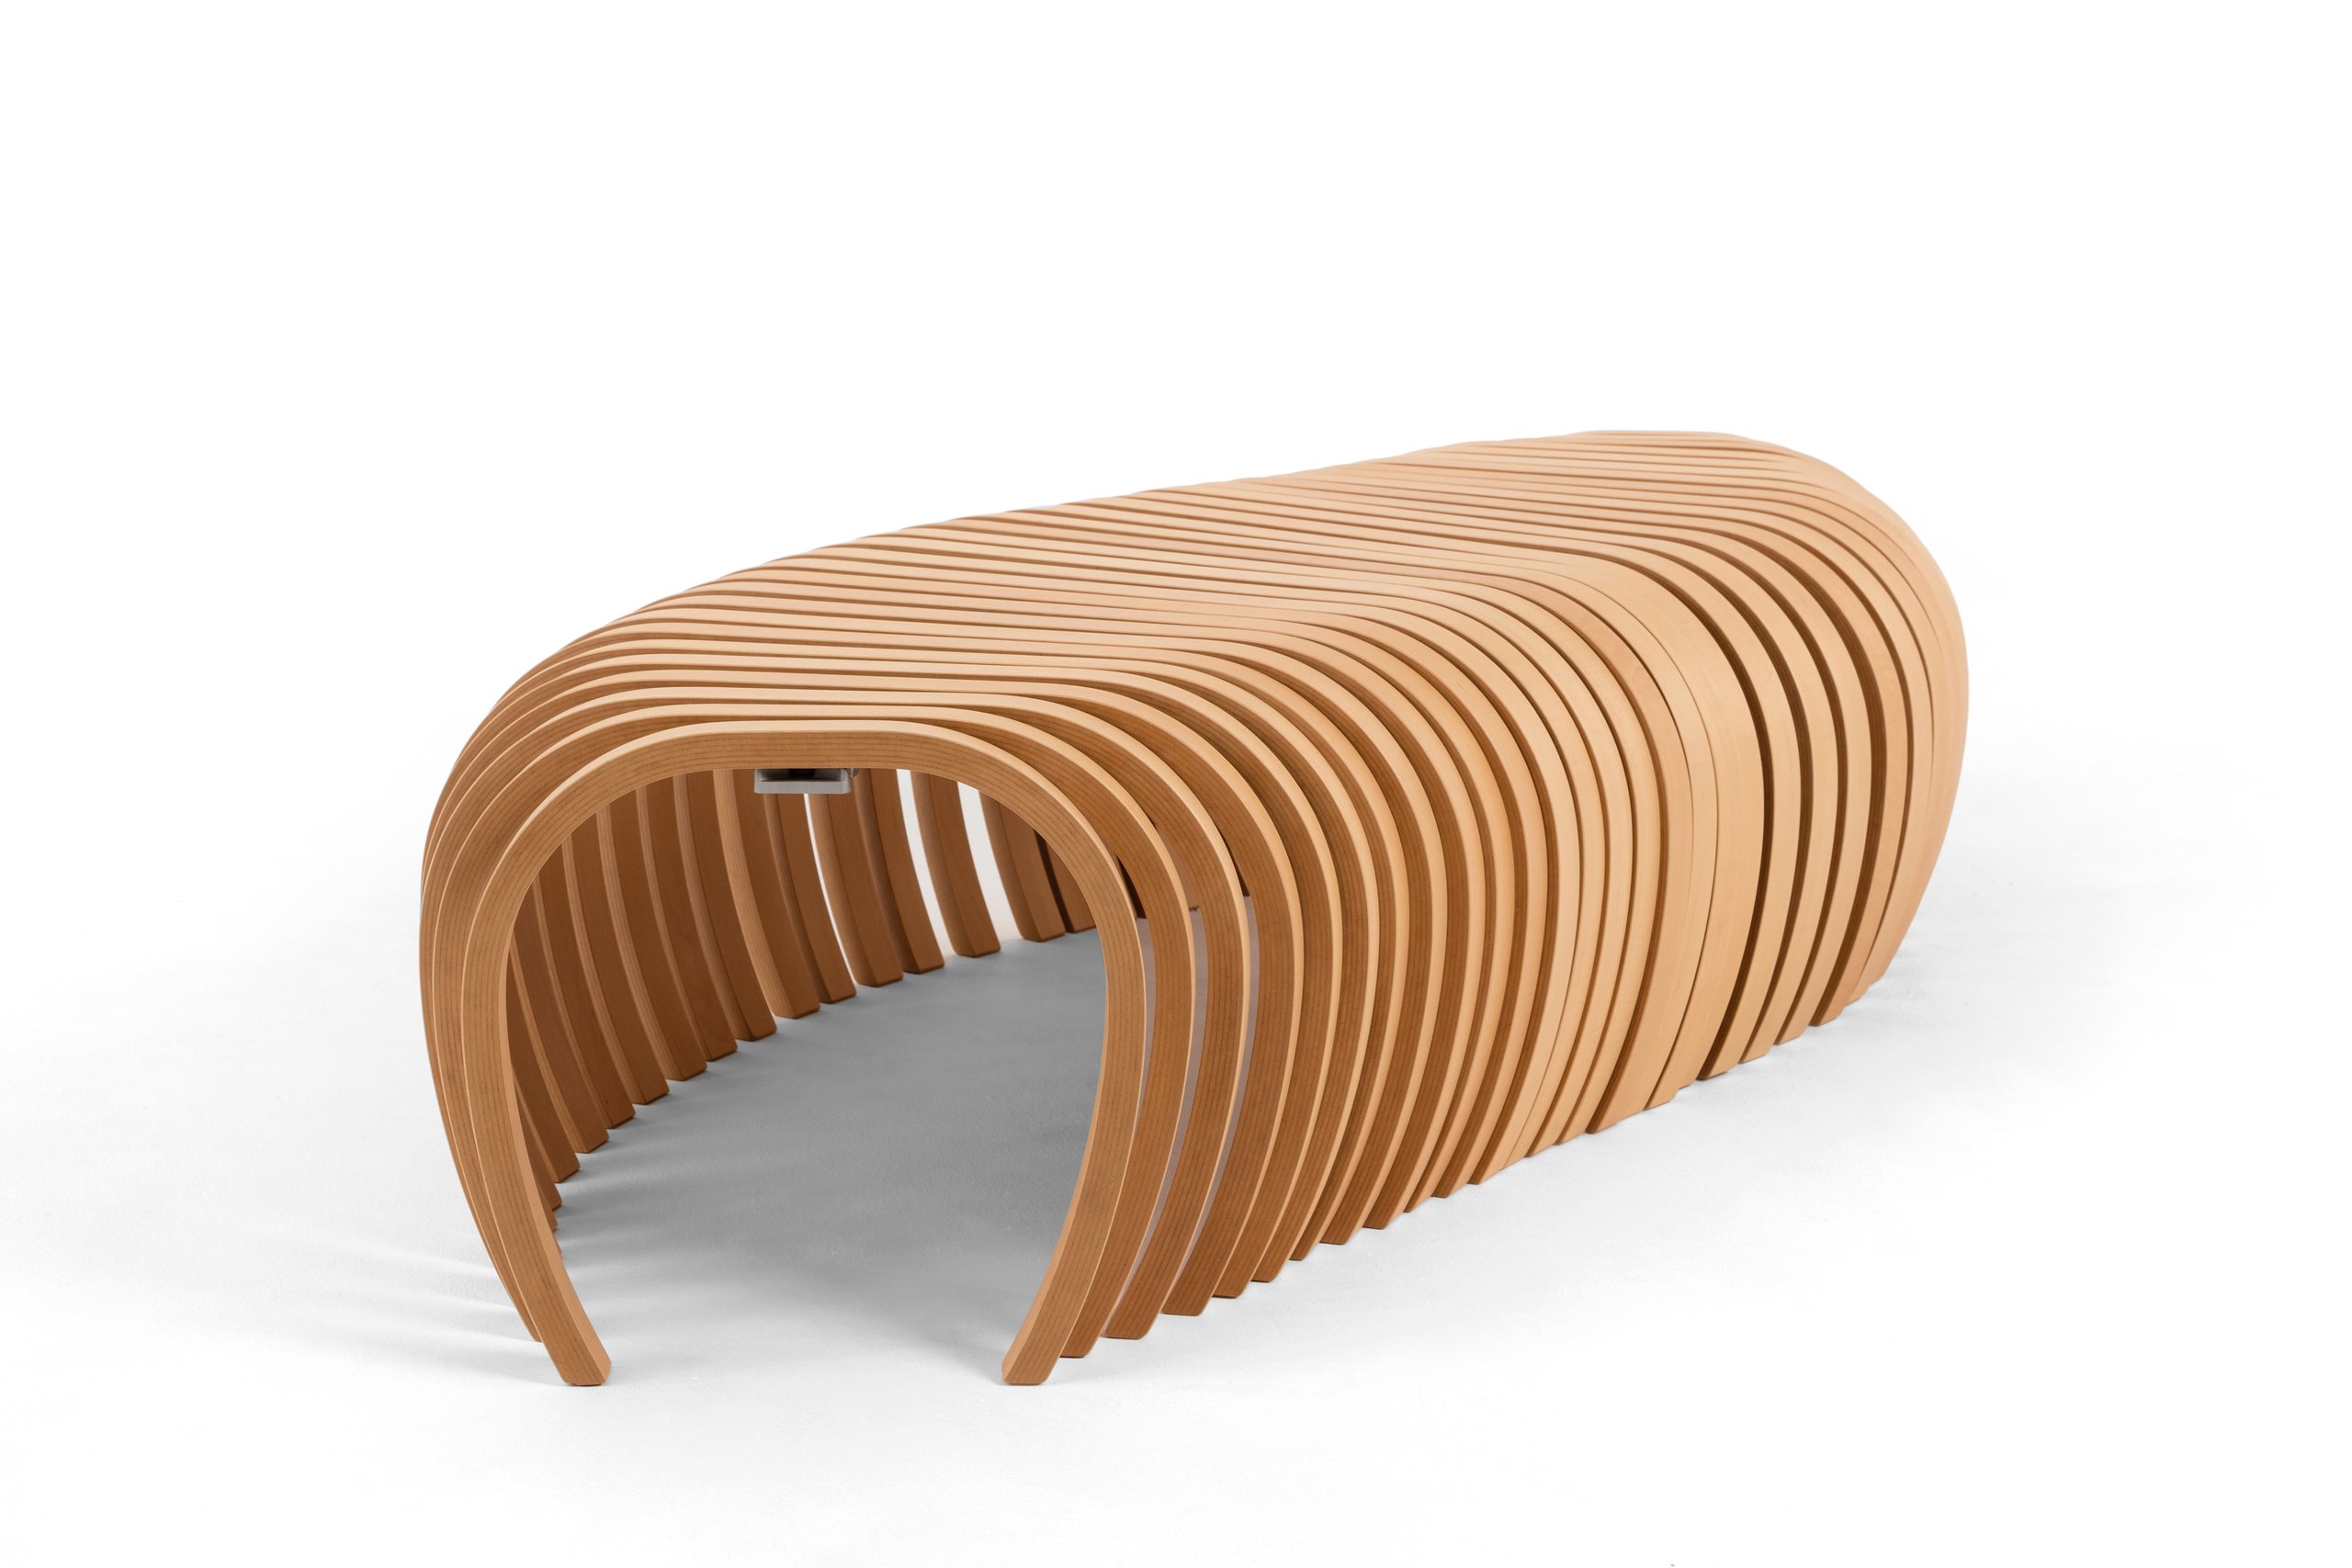 'Ribs Bench' by Stefan Lie